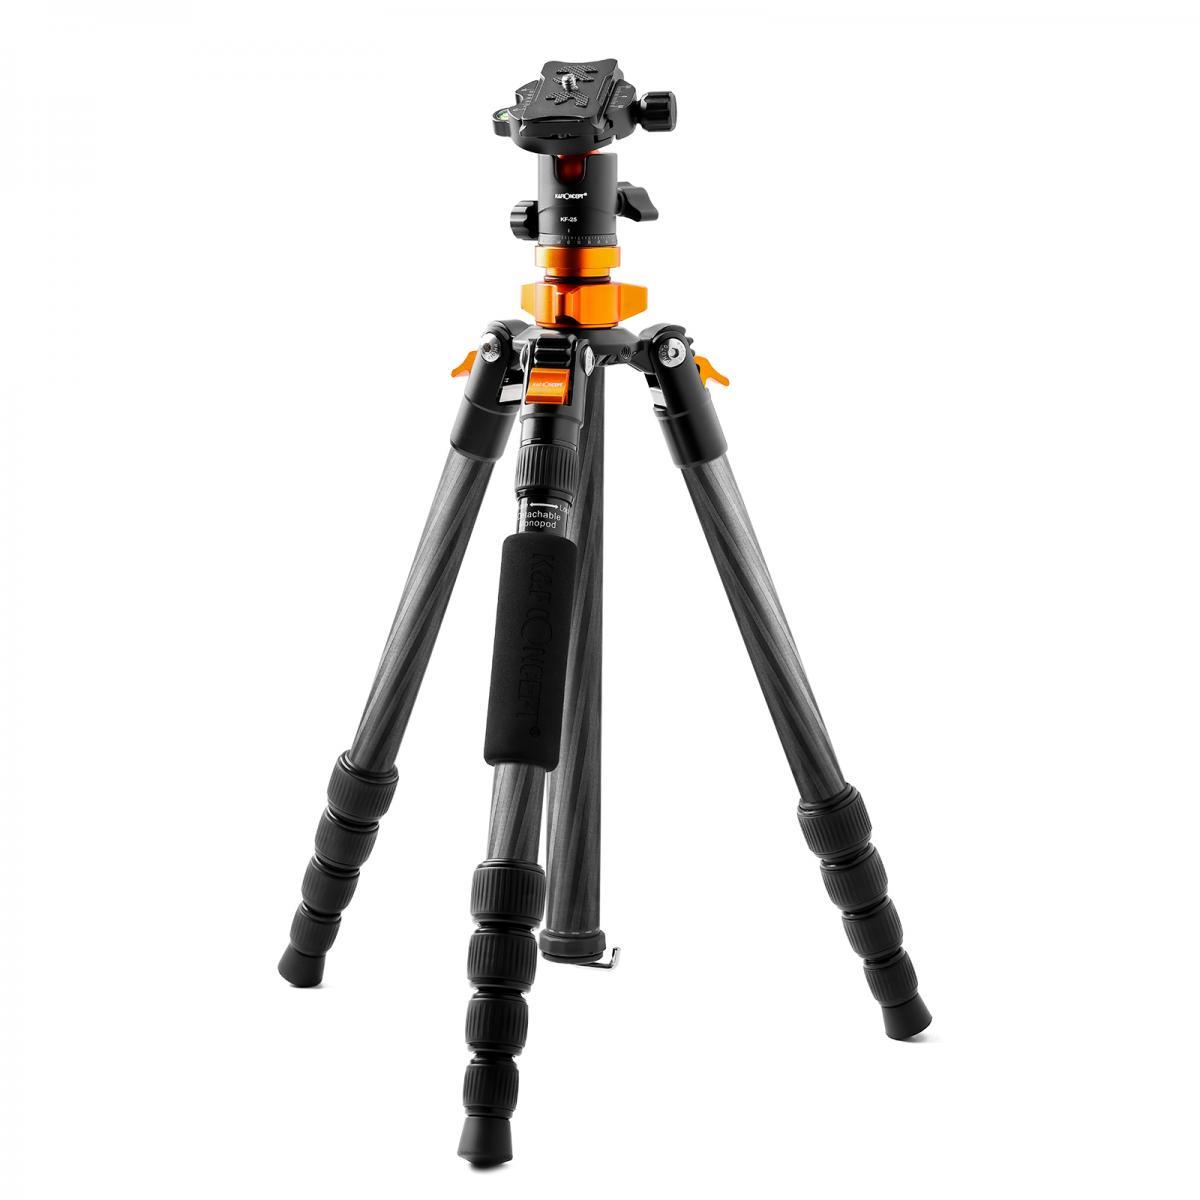 K&F Concept Orange Carbon Fiber Camera Tripod with Ball Head $100 + free s/h at Adorama